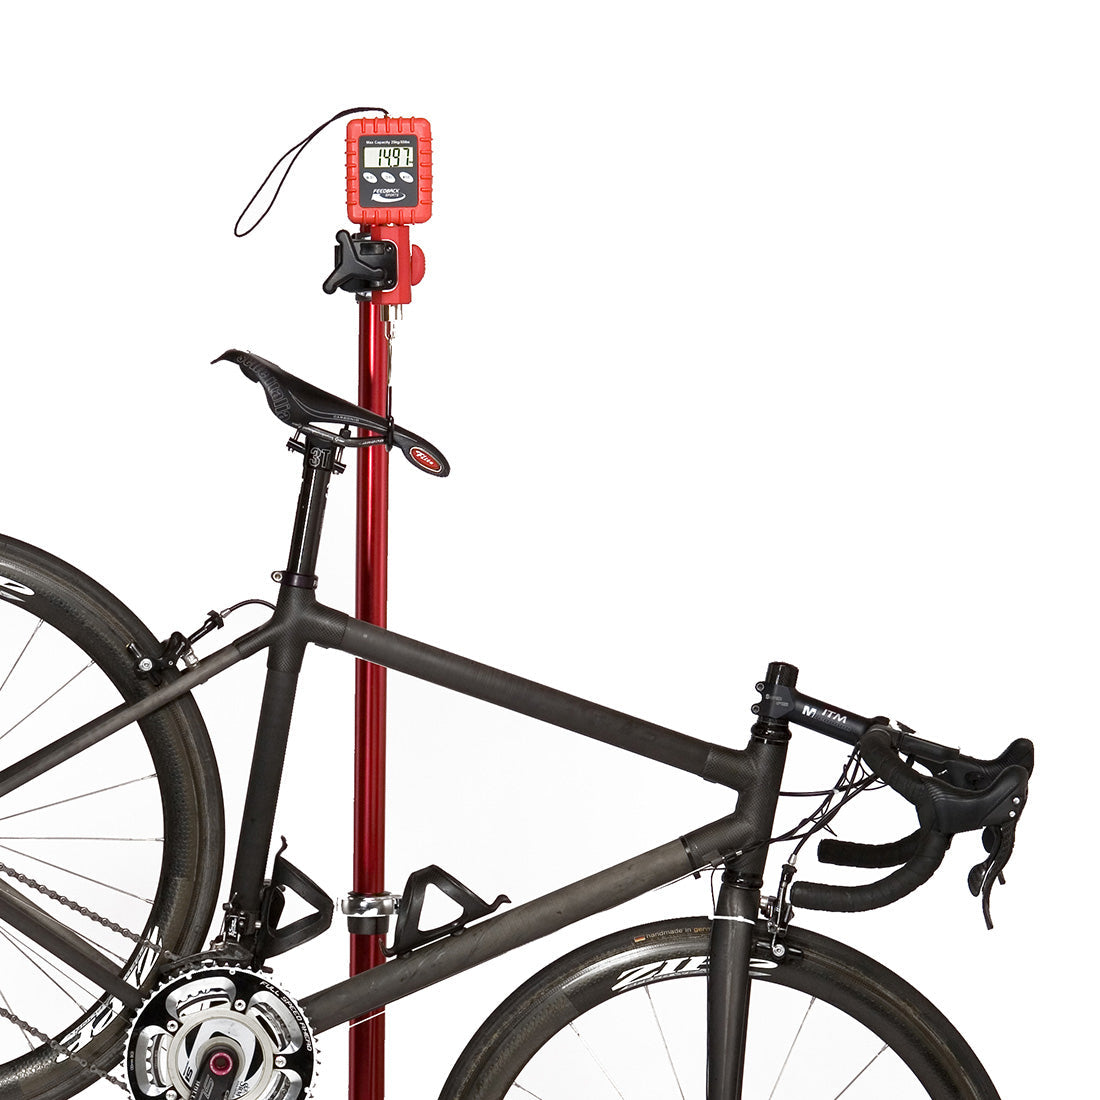 FeedBack Sports Alpine Digital Hanging Bike Scale